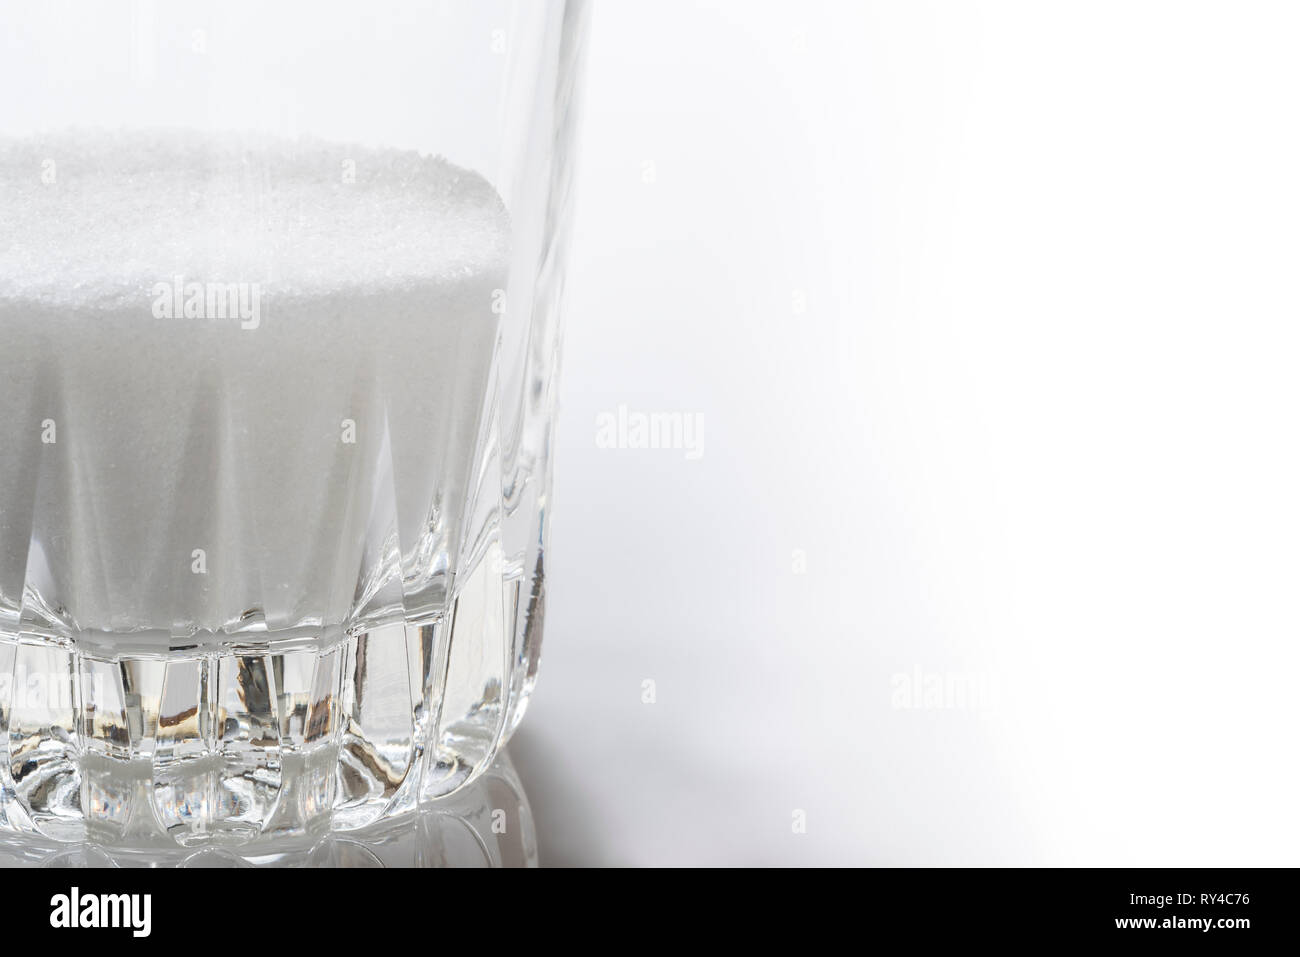 Granulated sugar in a glass tumbler. Stock Photo